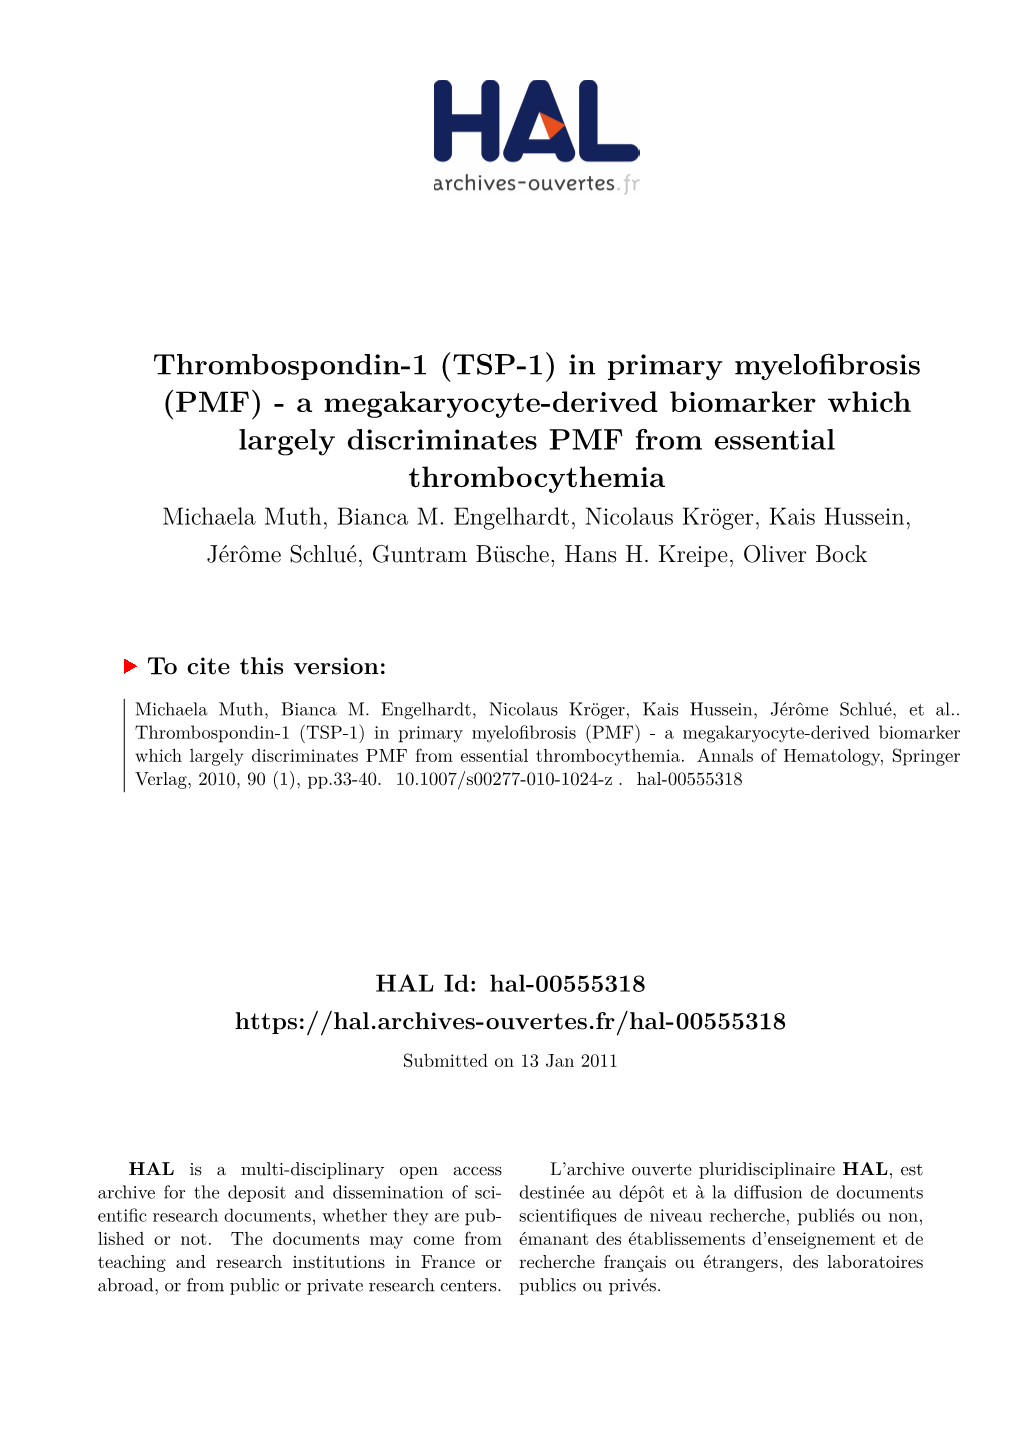 Thrombospondin-1 (TSP-1) in Primary Myelofibrosis